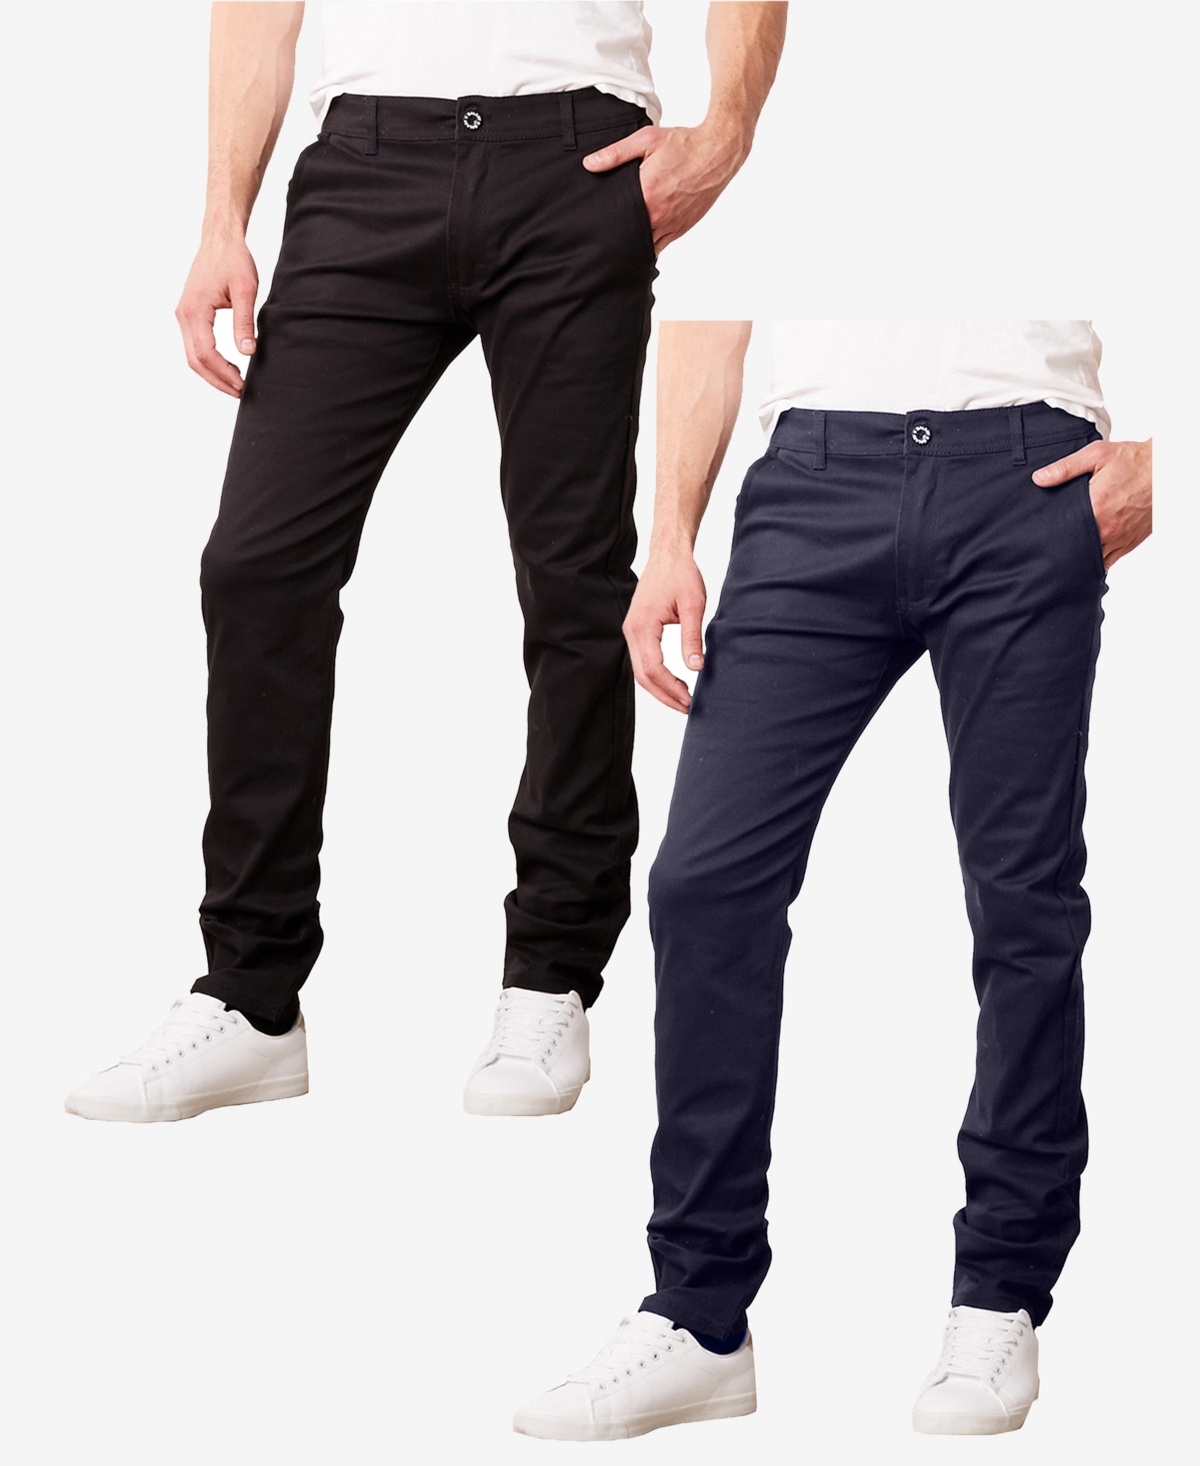 Men's Super Stretch Slim Fit Everyday Chino Pants, Pack of 2 - Dark Khaki Khaki